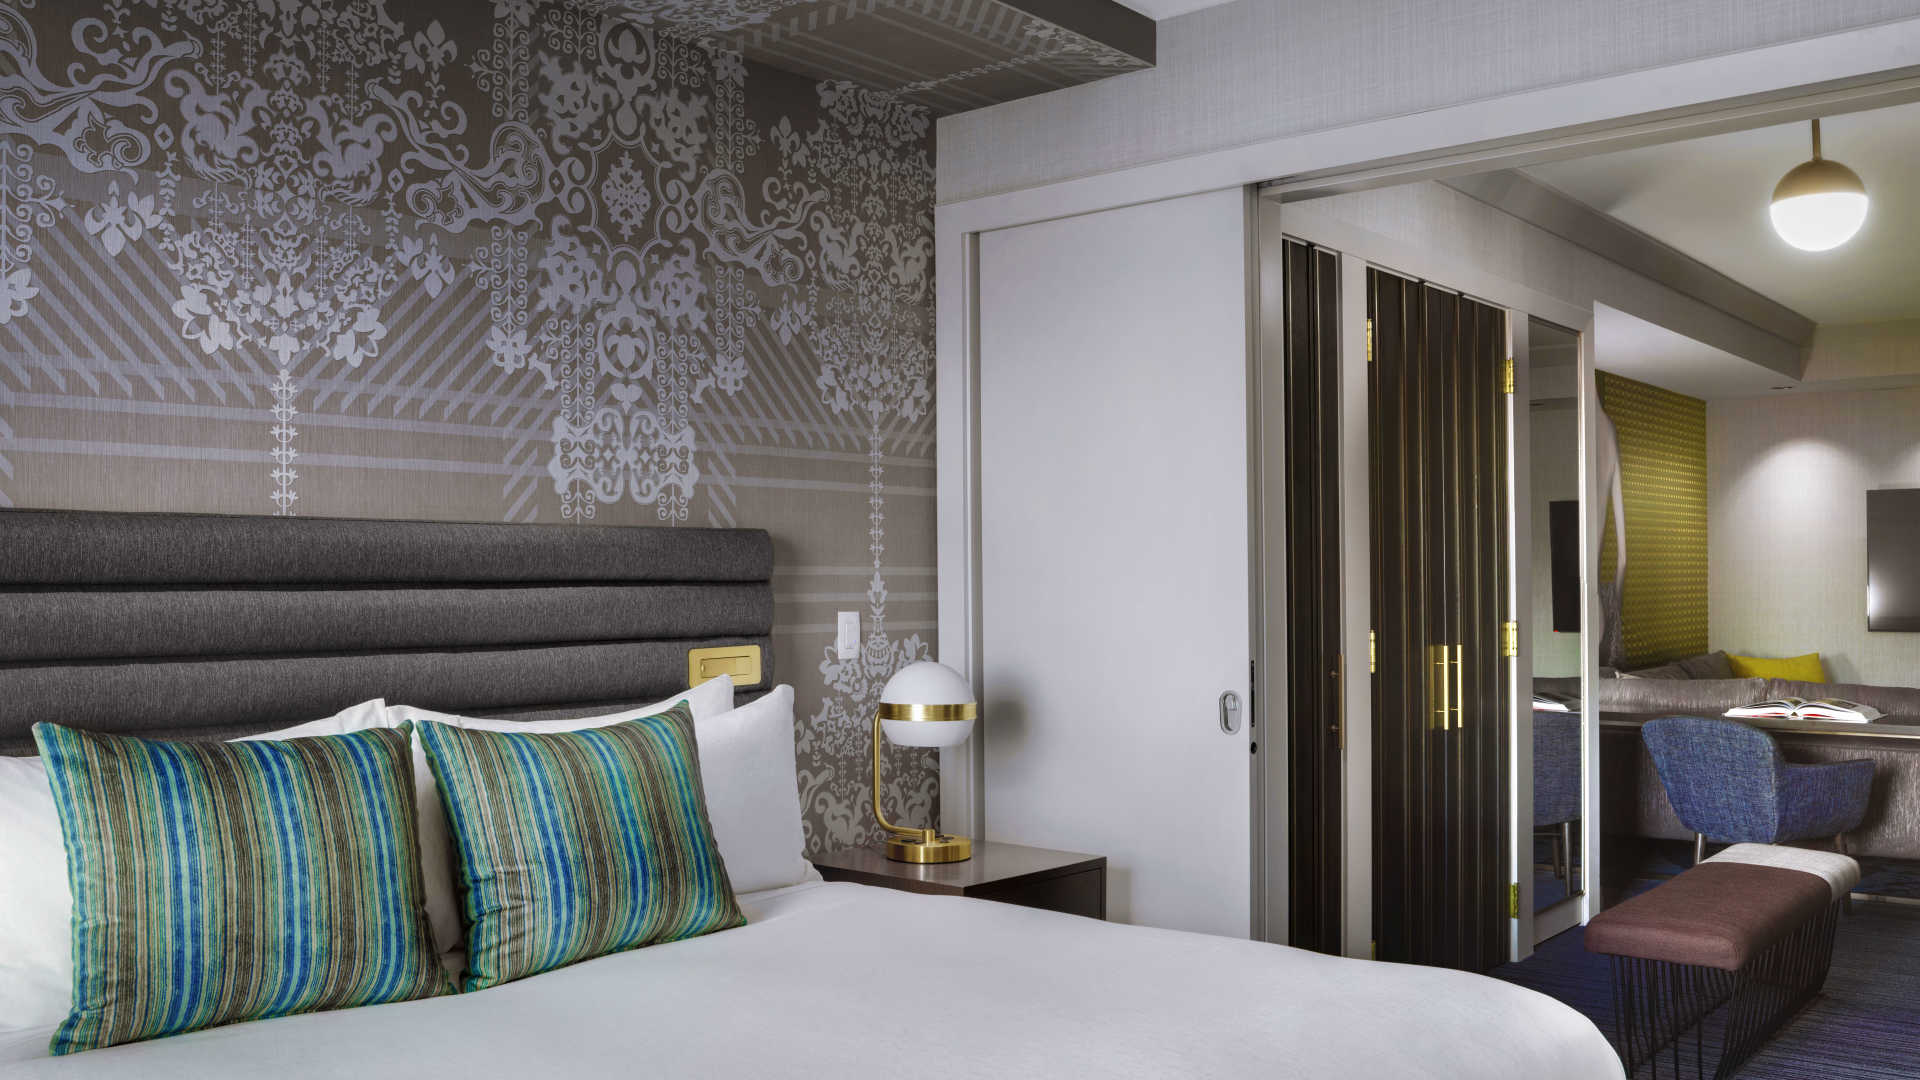 Las Vegas Luxury Hotel Rooms And Suites The Cosmopolitan